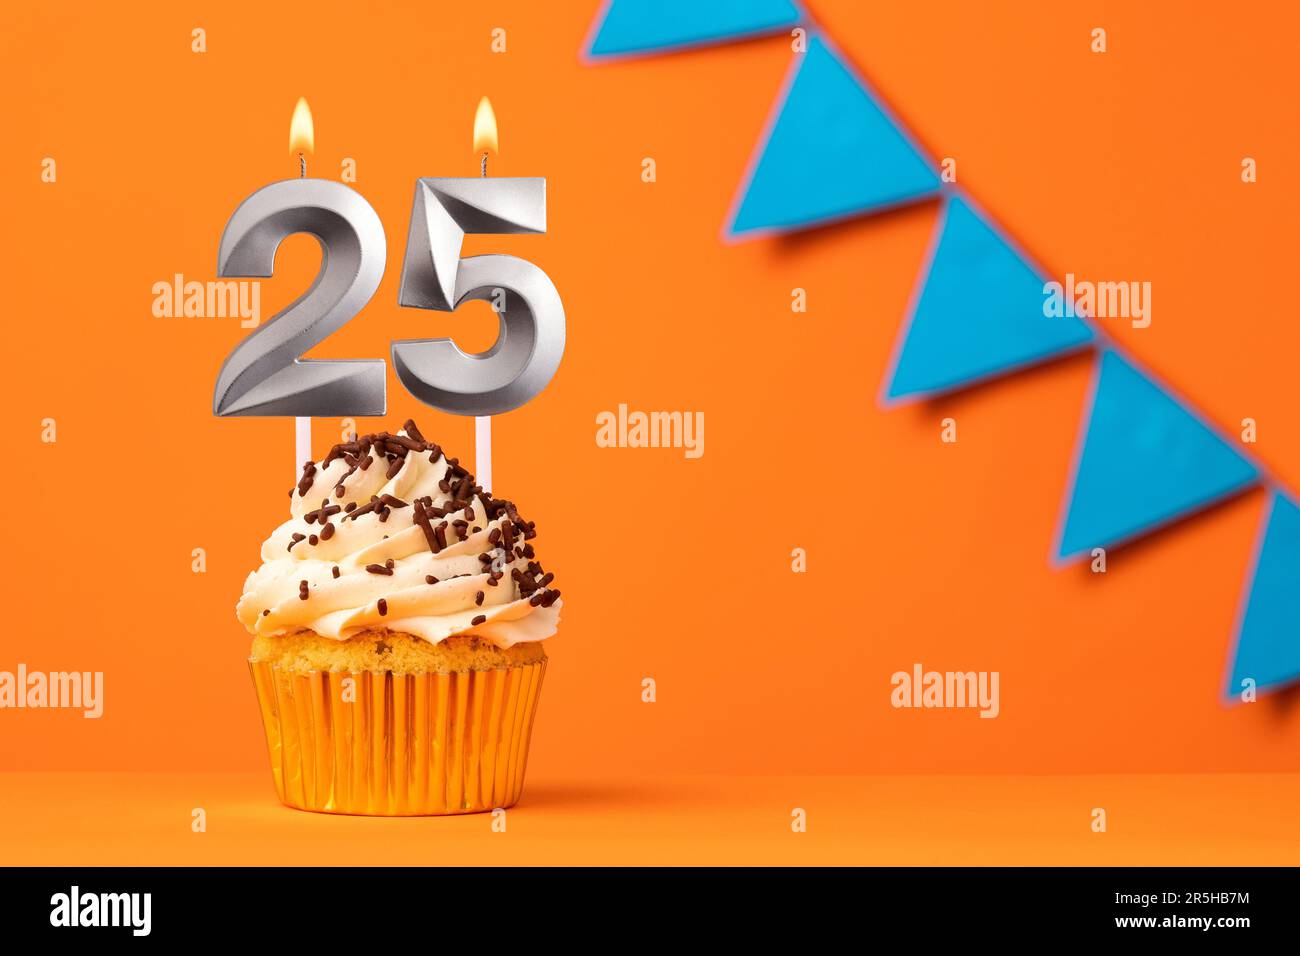 Candela numero 25 - compleanno torta su sfondo arancione Foto Stock